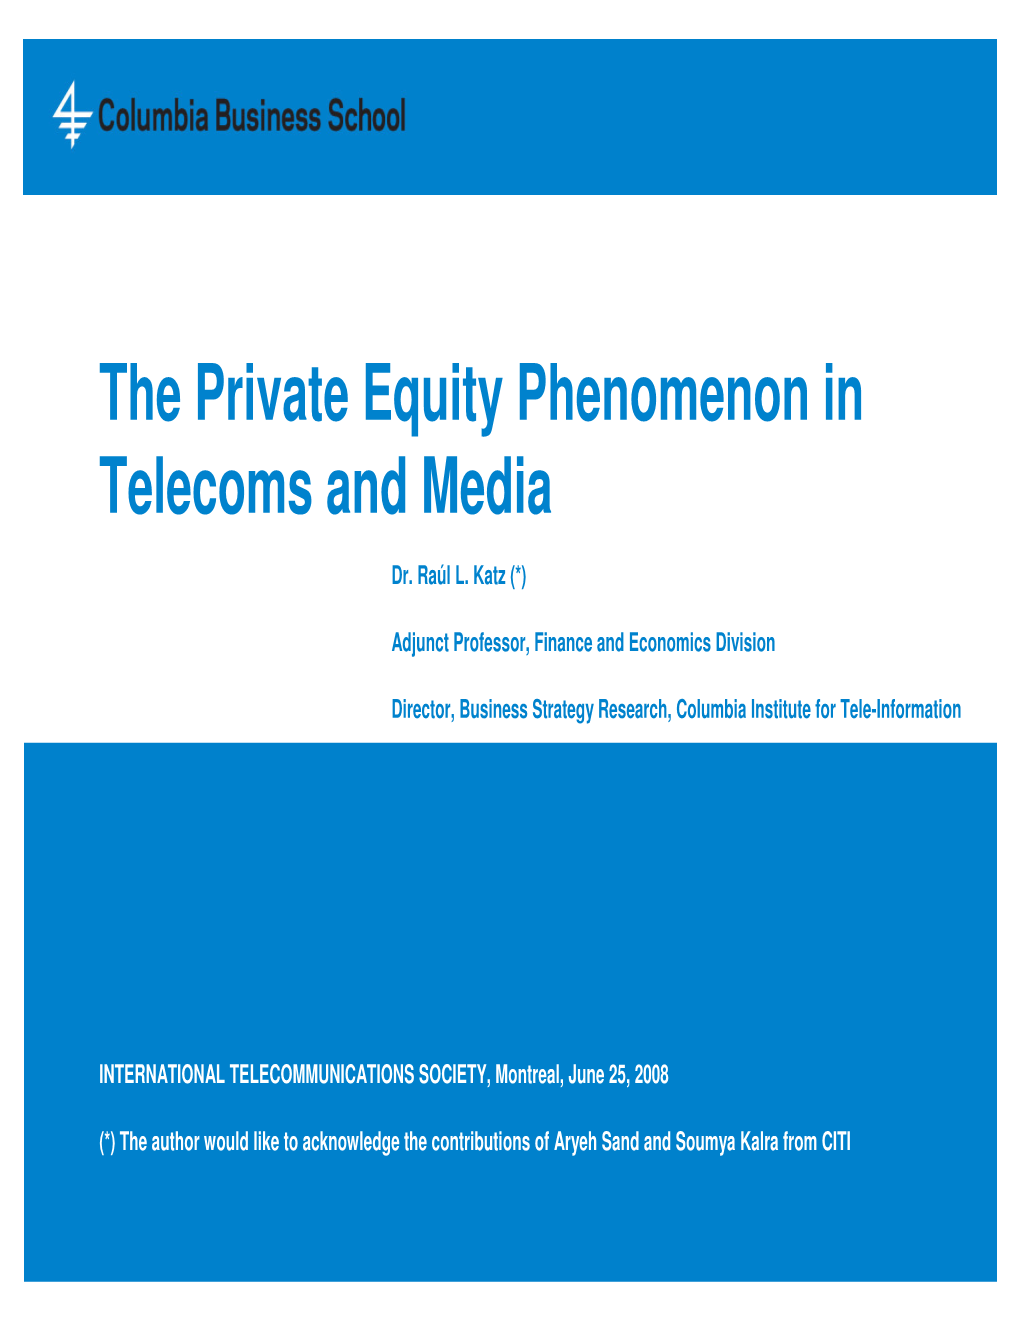 The Private Equity Phenomenon in Telecoms and Media